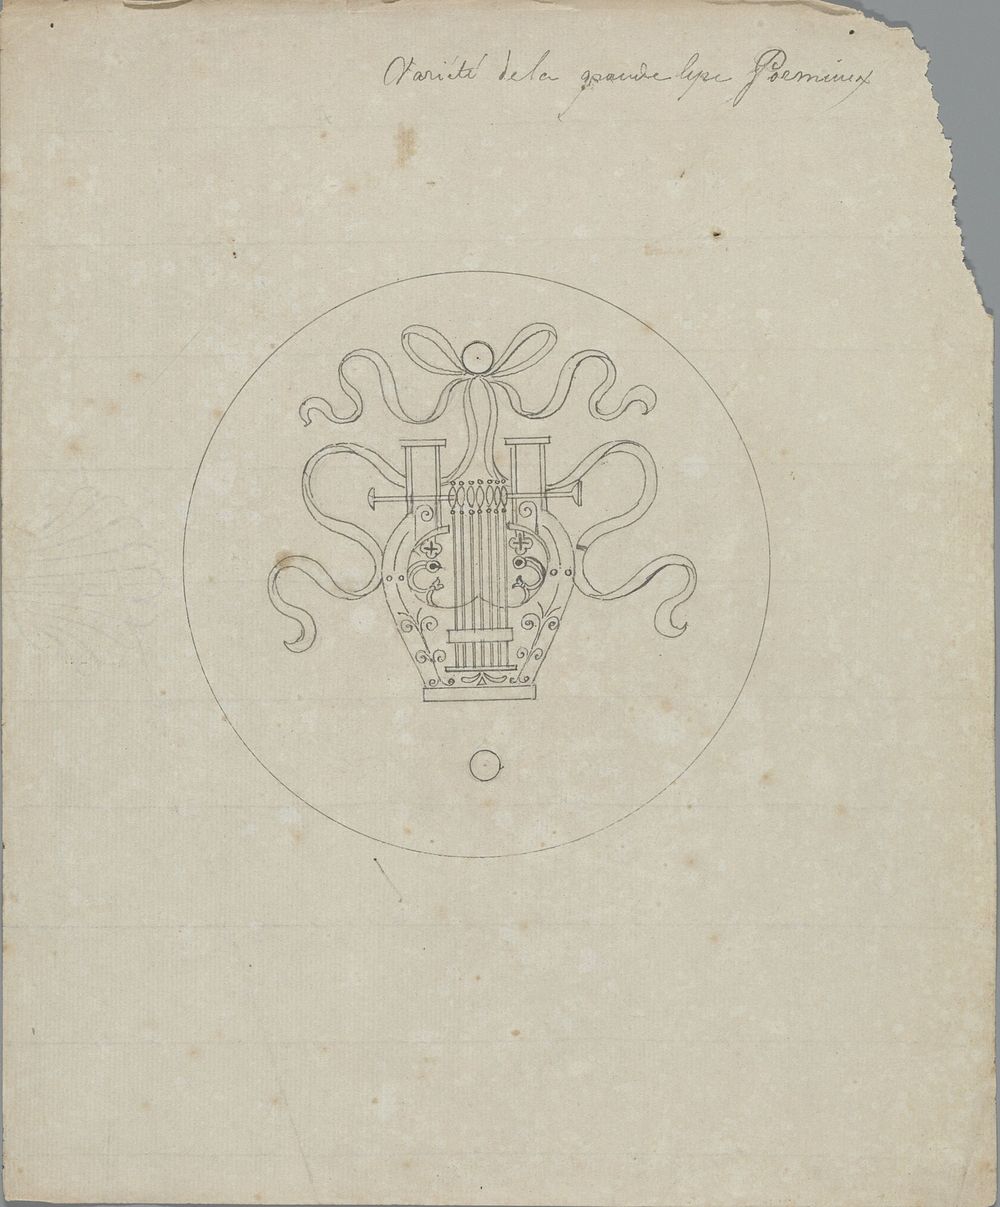 Variété de la grande lyre Porminex [?] (in or before 1828) by Pierre Félix van Doren